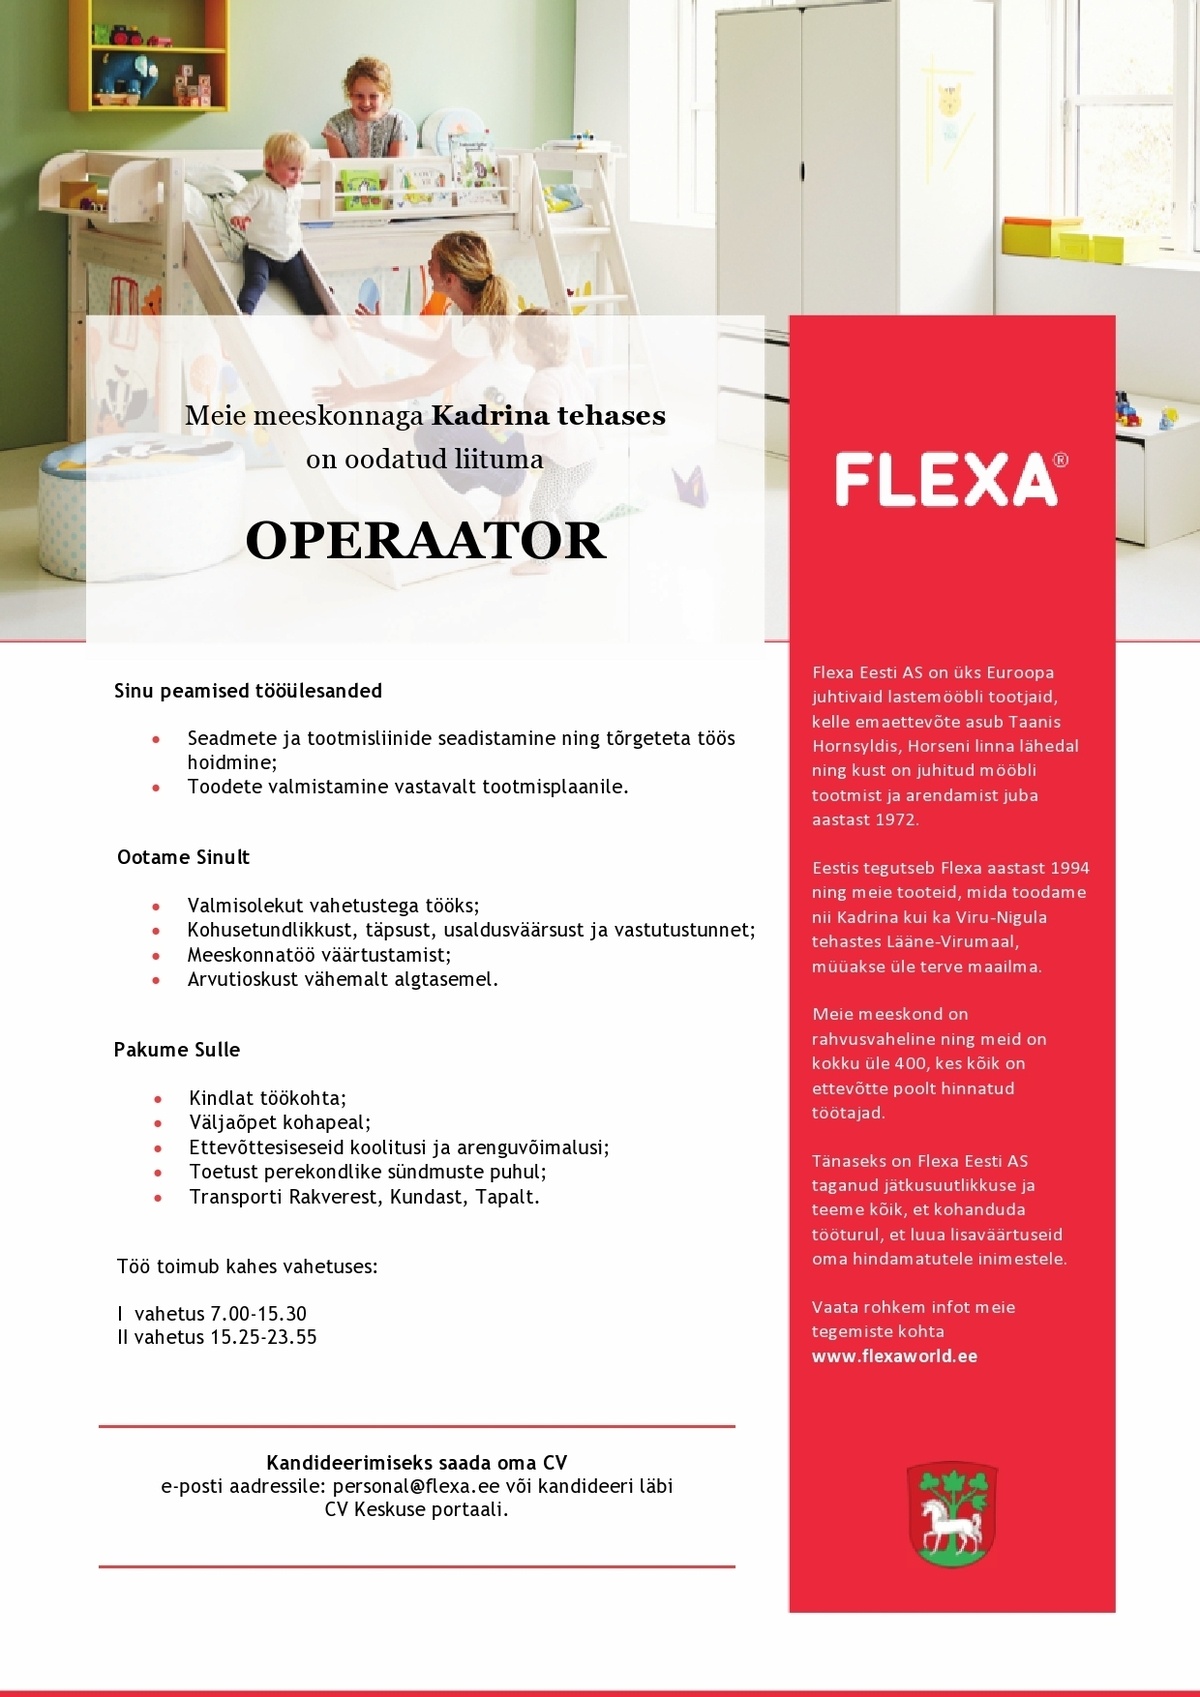 Flexa Eesti AS Operaator (Kadrina tehases)